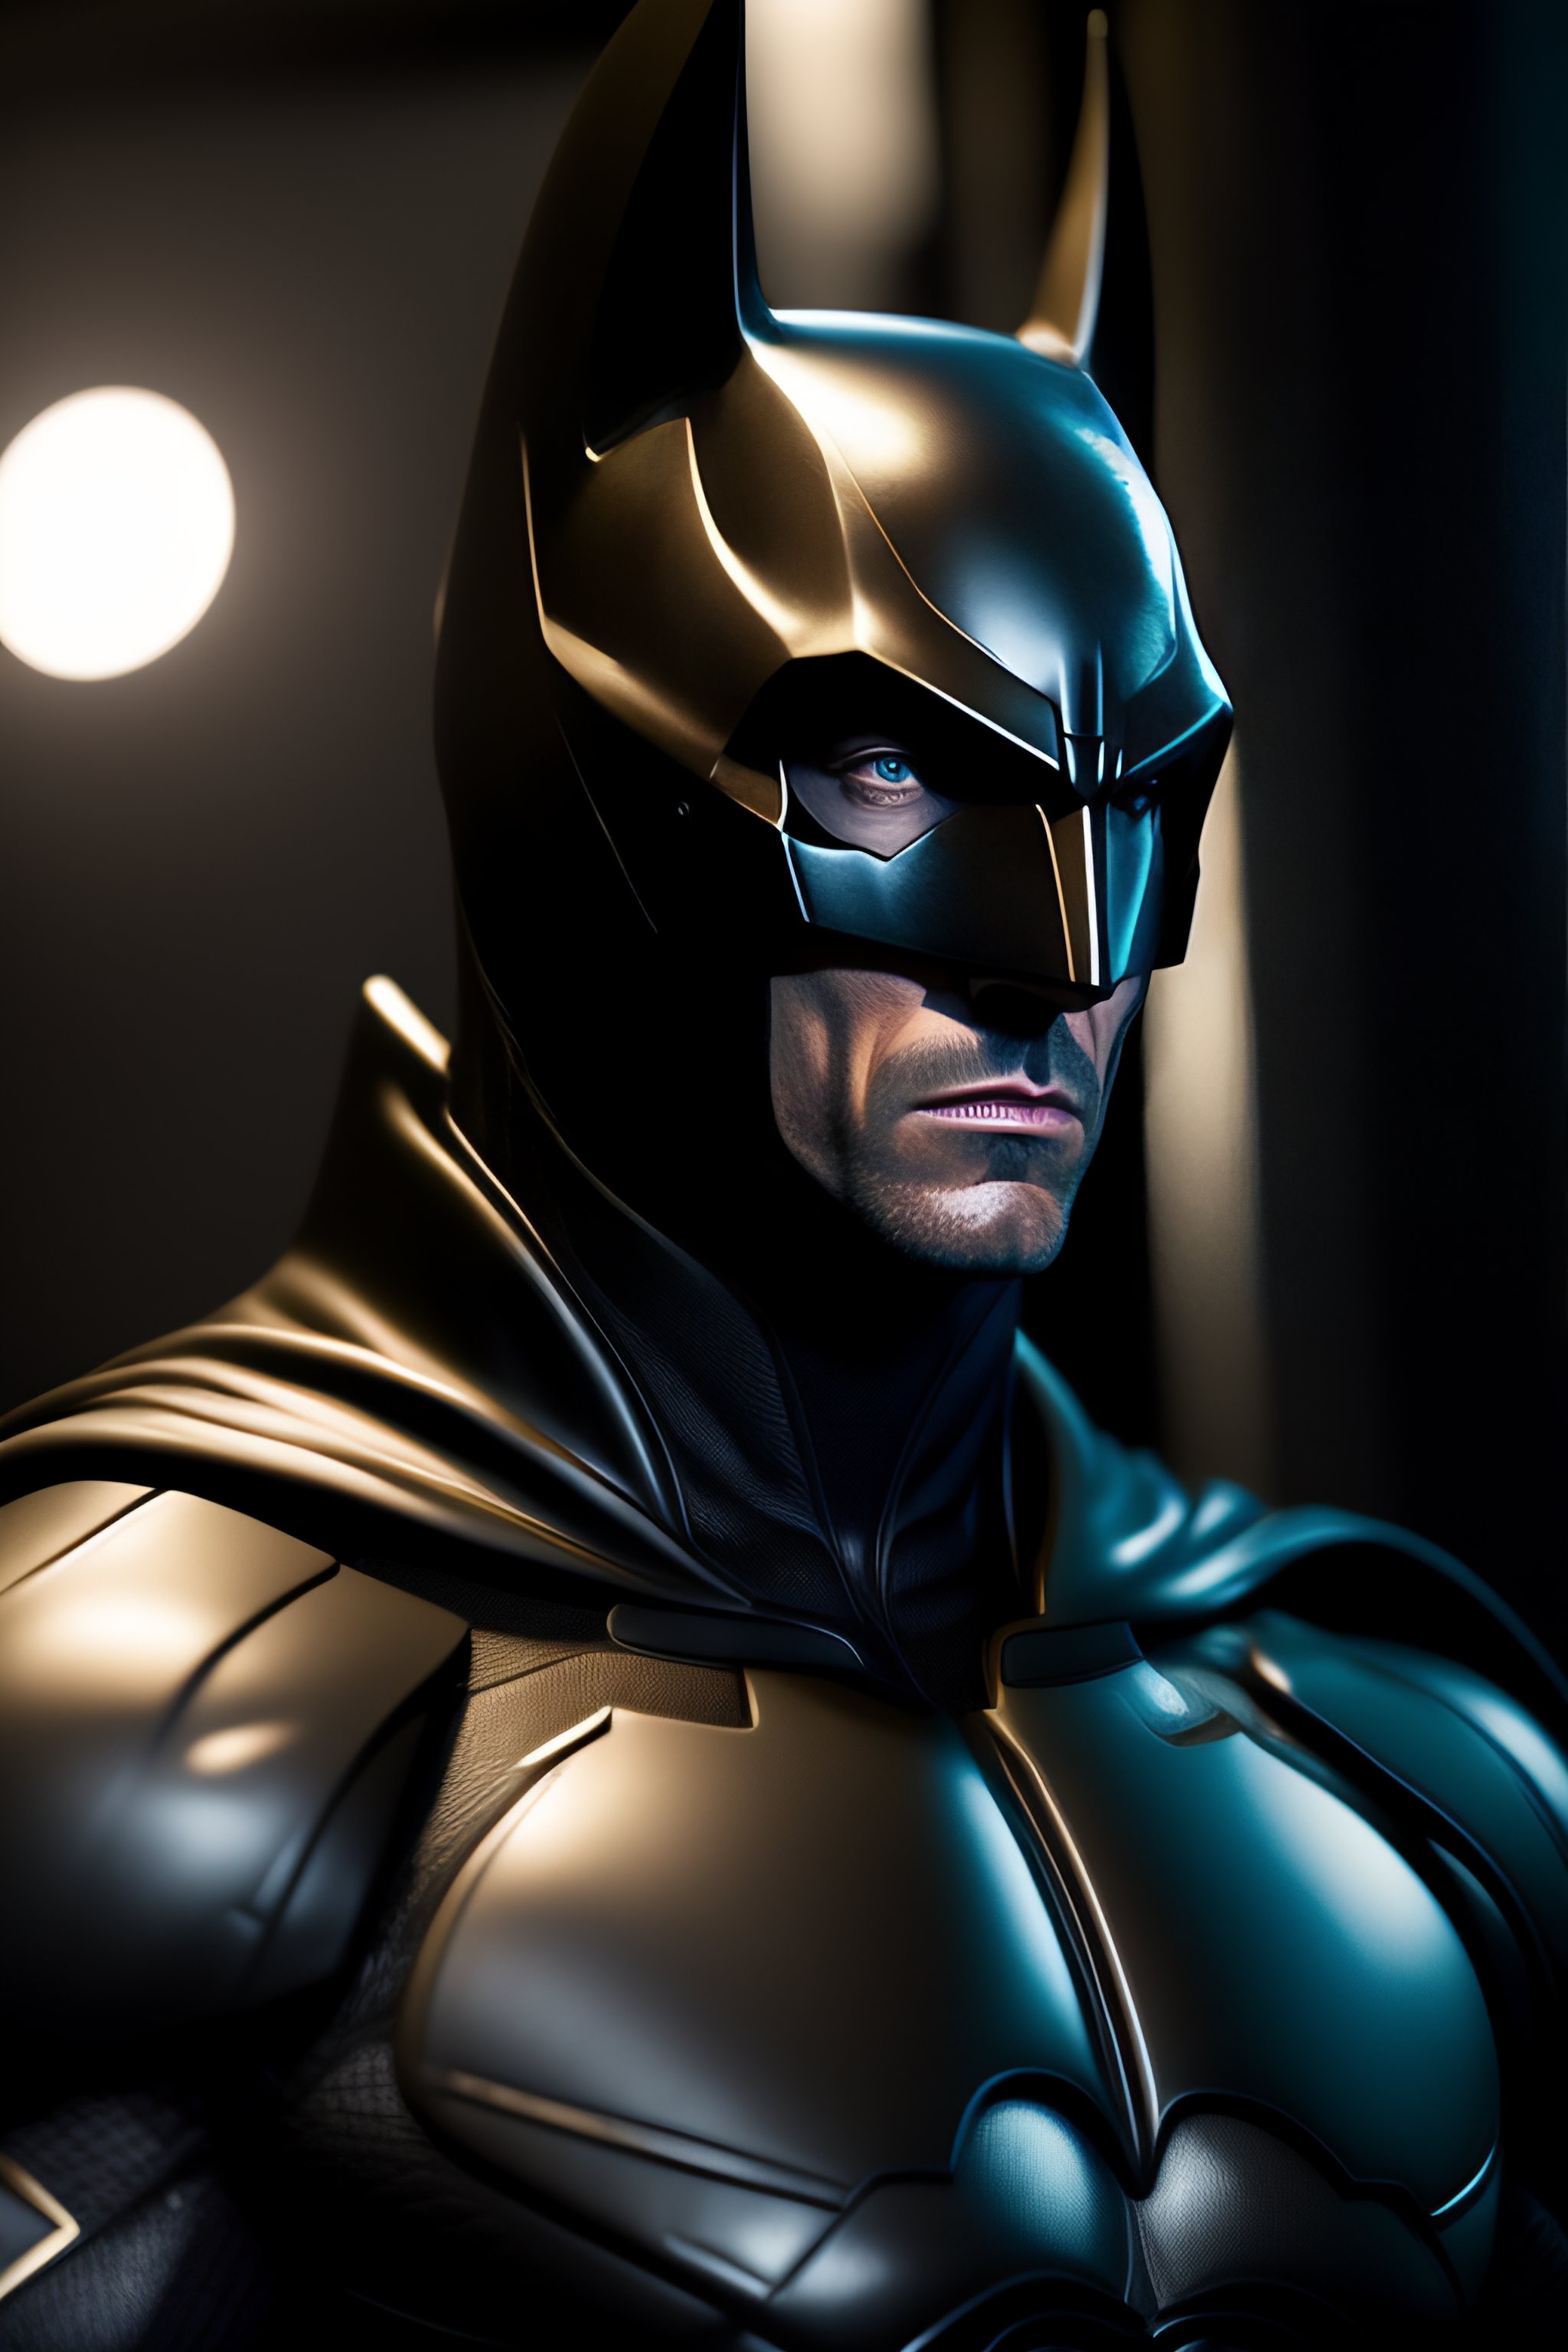 Lexica - Hugh jackman as bruce wayne with batsuit in batman movie, full body